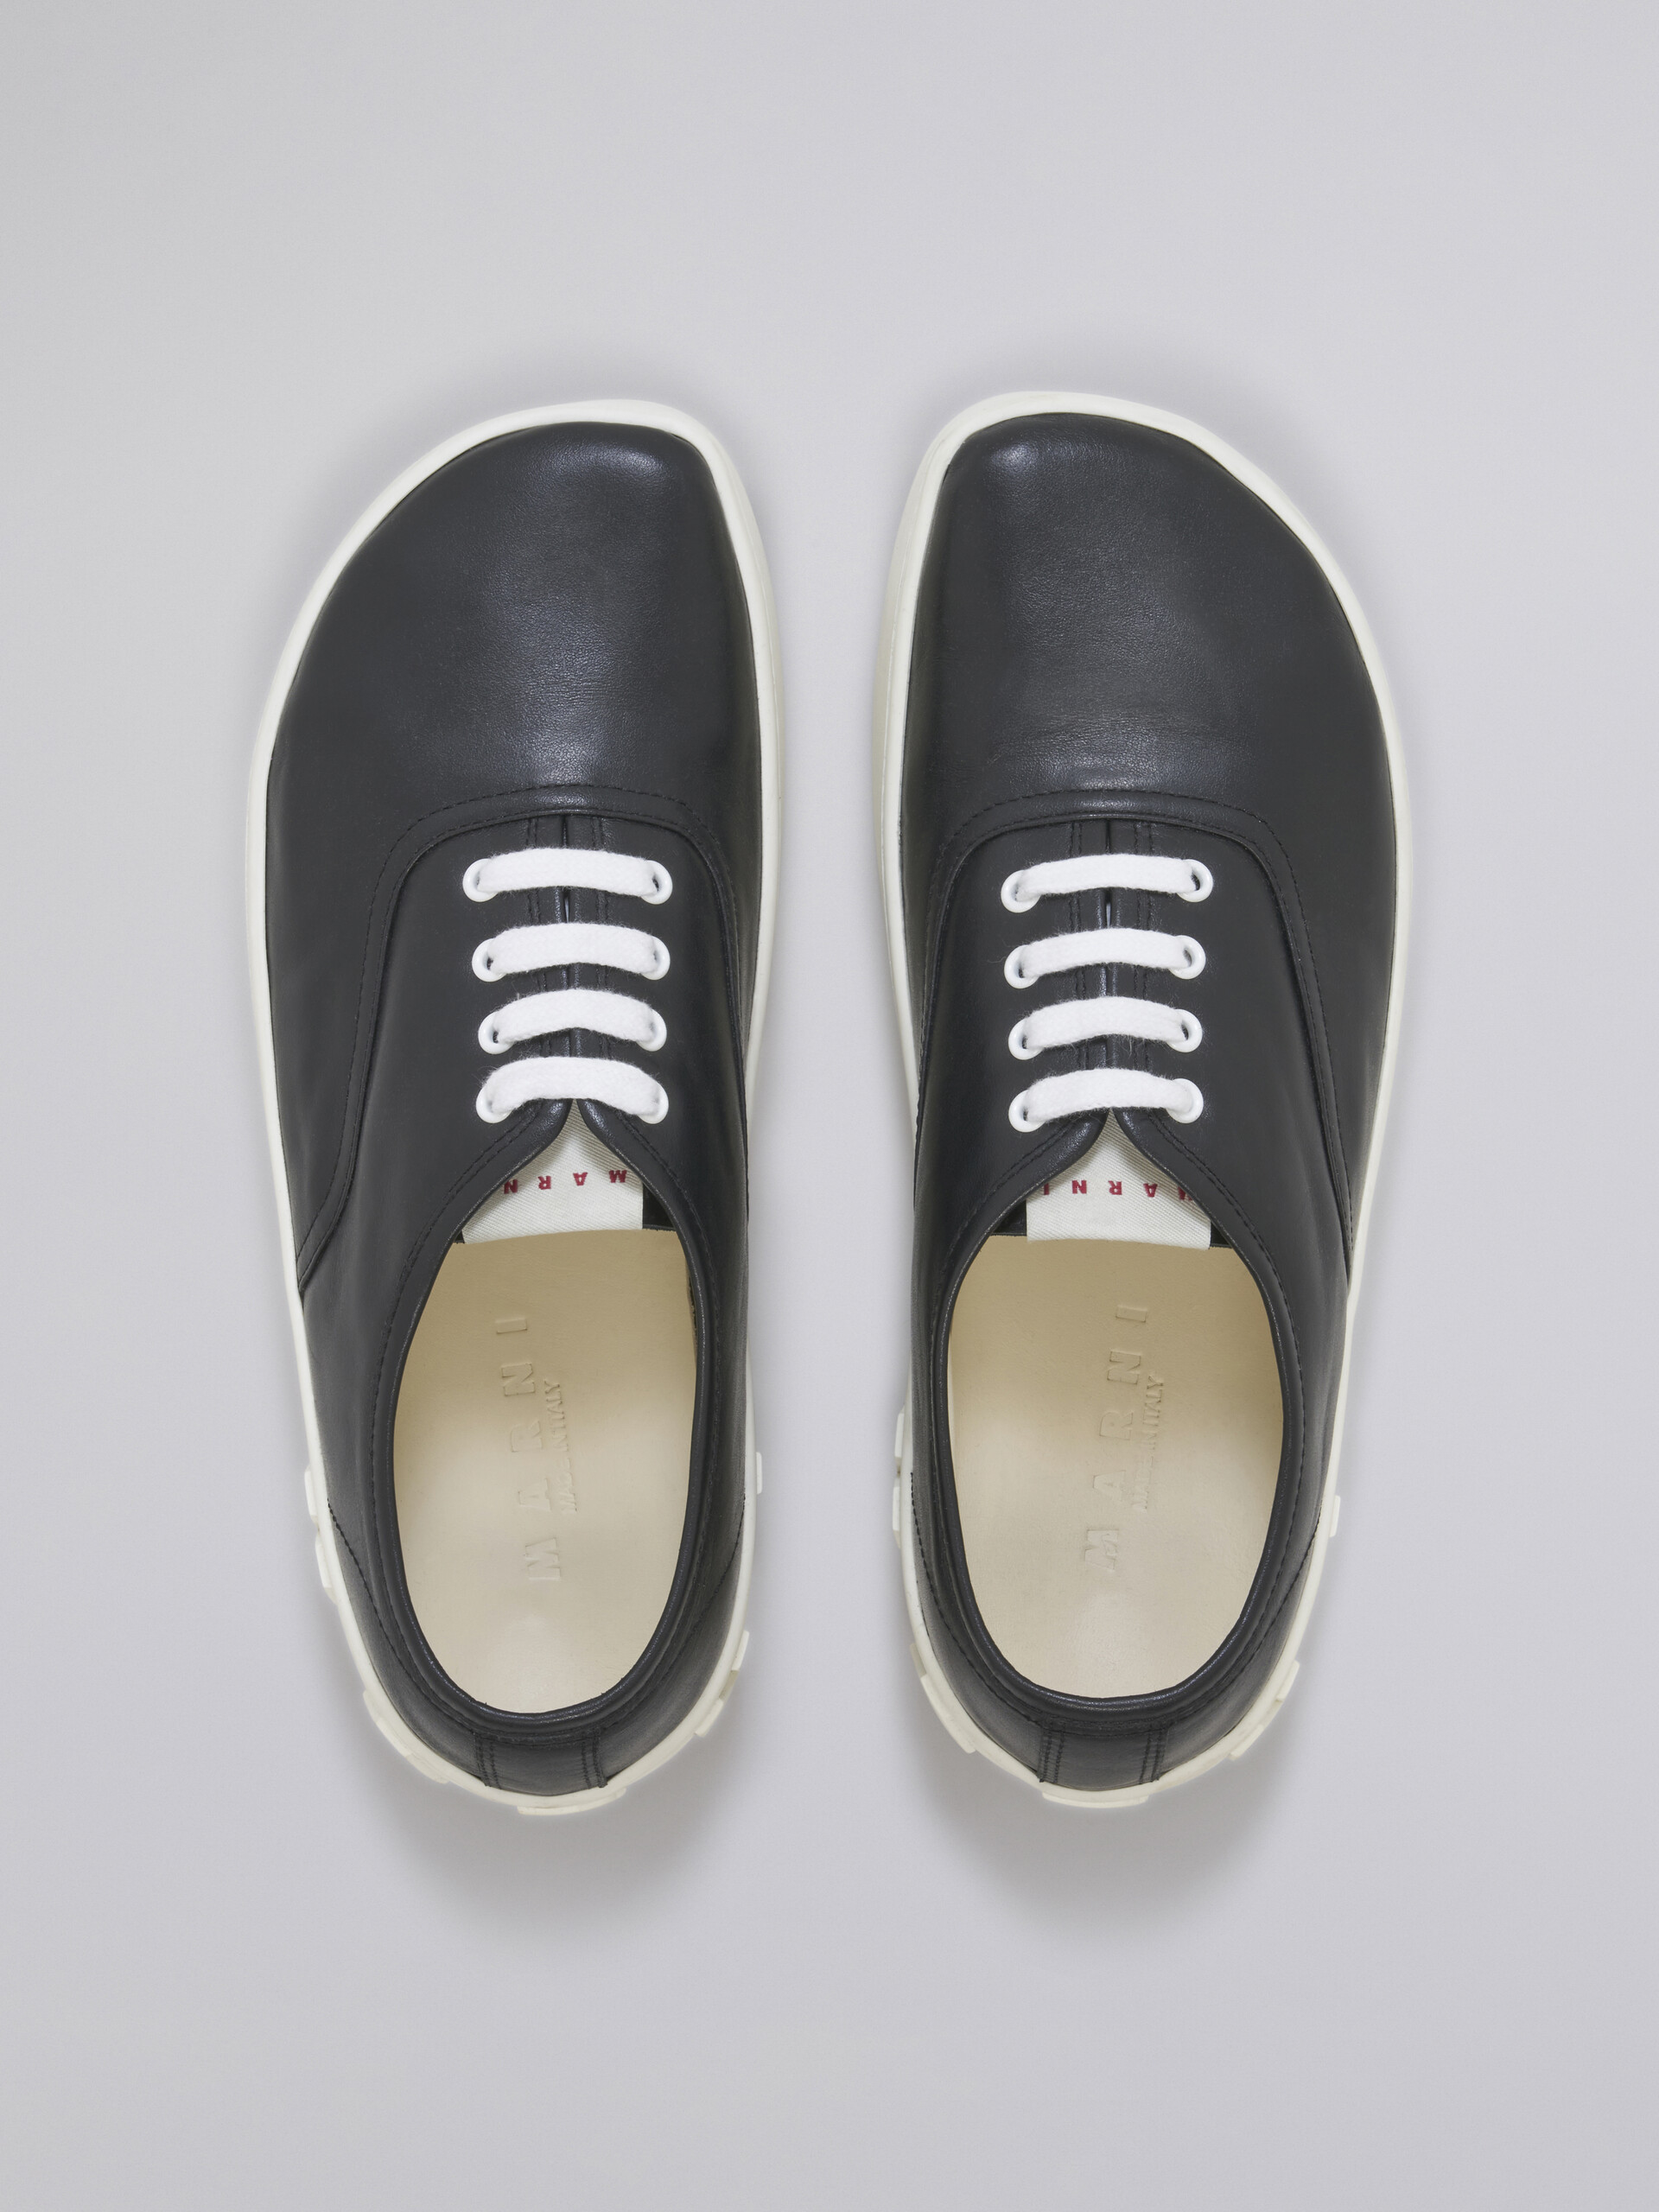 Sneaker in pelle nera con maxi logo - Sneakers - Image 4